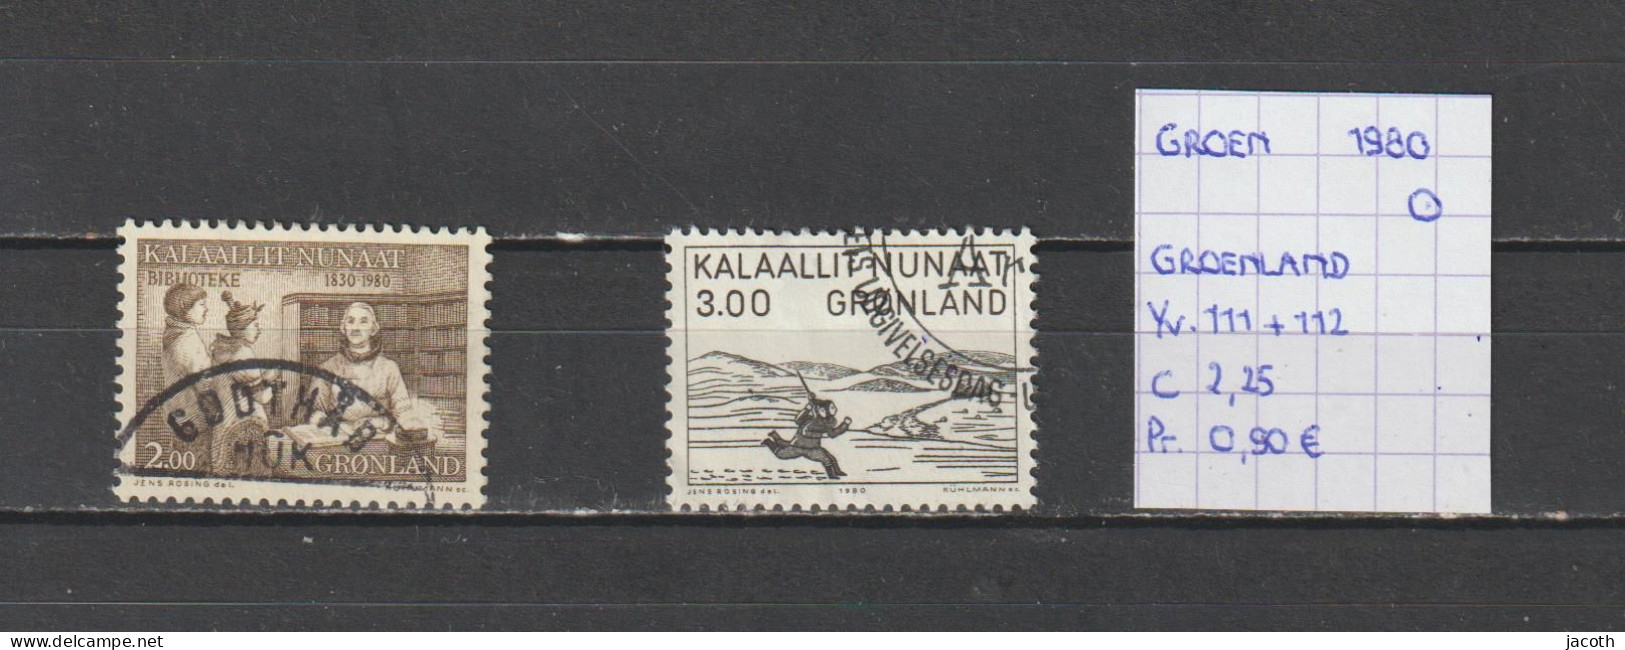 (TJ) Groenland 1980 - YT 111 + 112 (gest./obl./used) - Usati